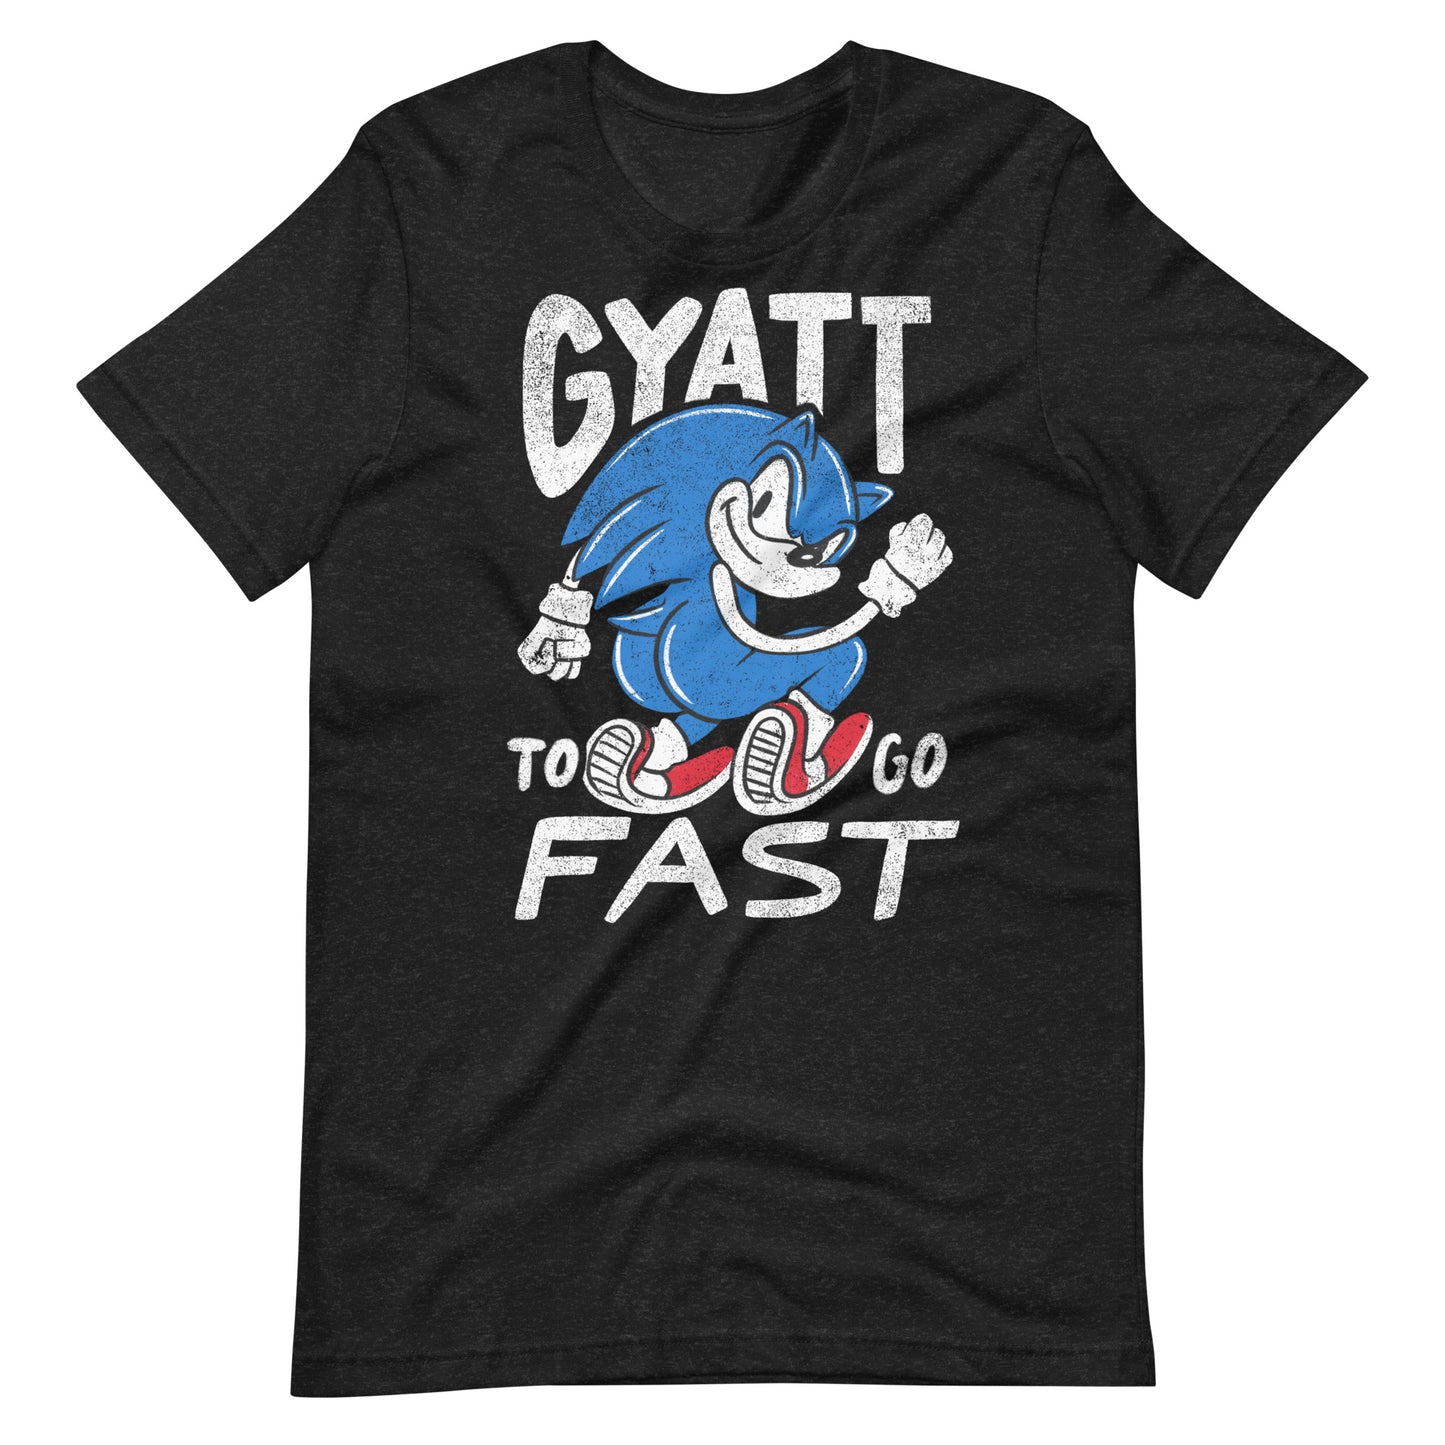 GYATT To Go Fast! - Sonic The Hedgehog Viral T-Shirt